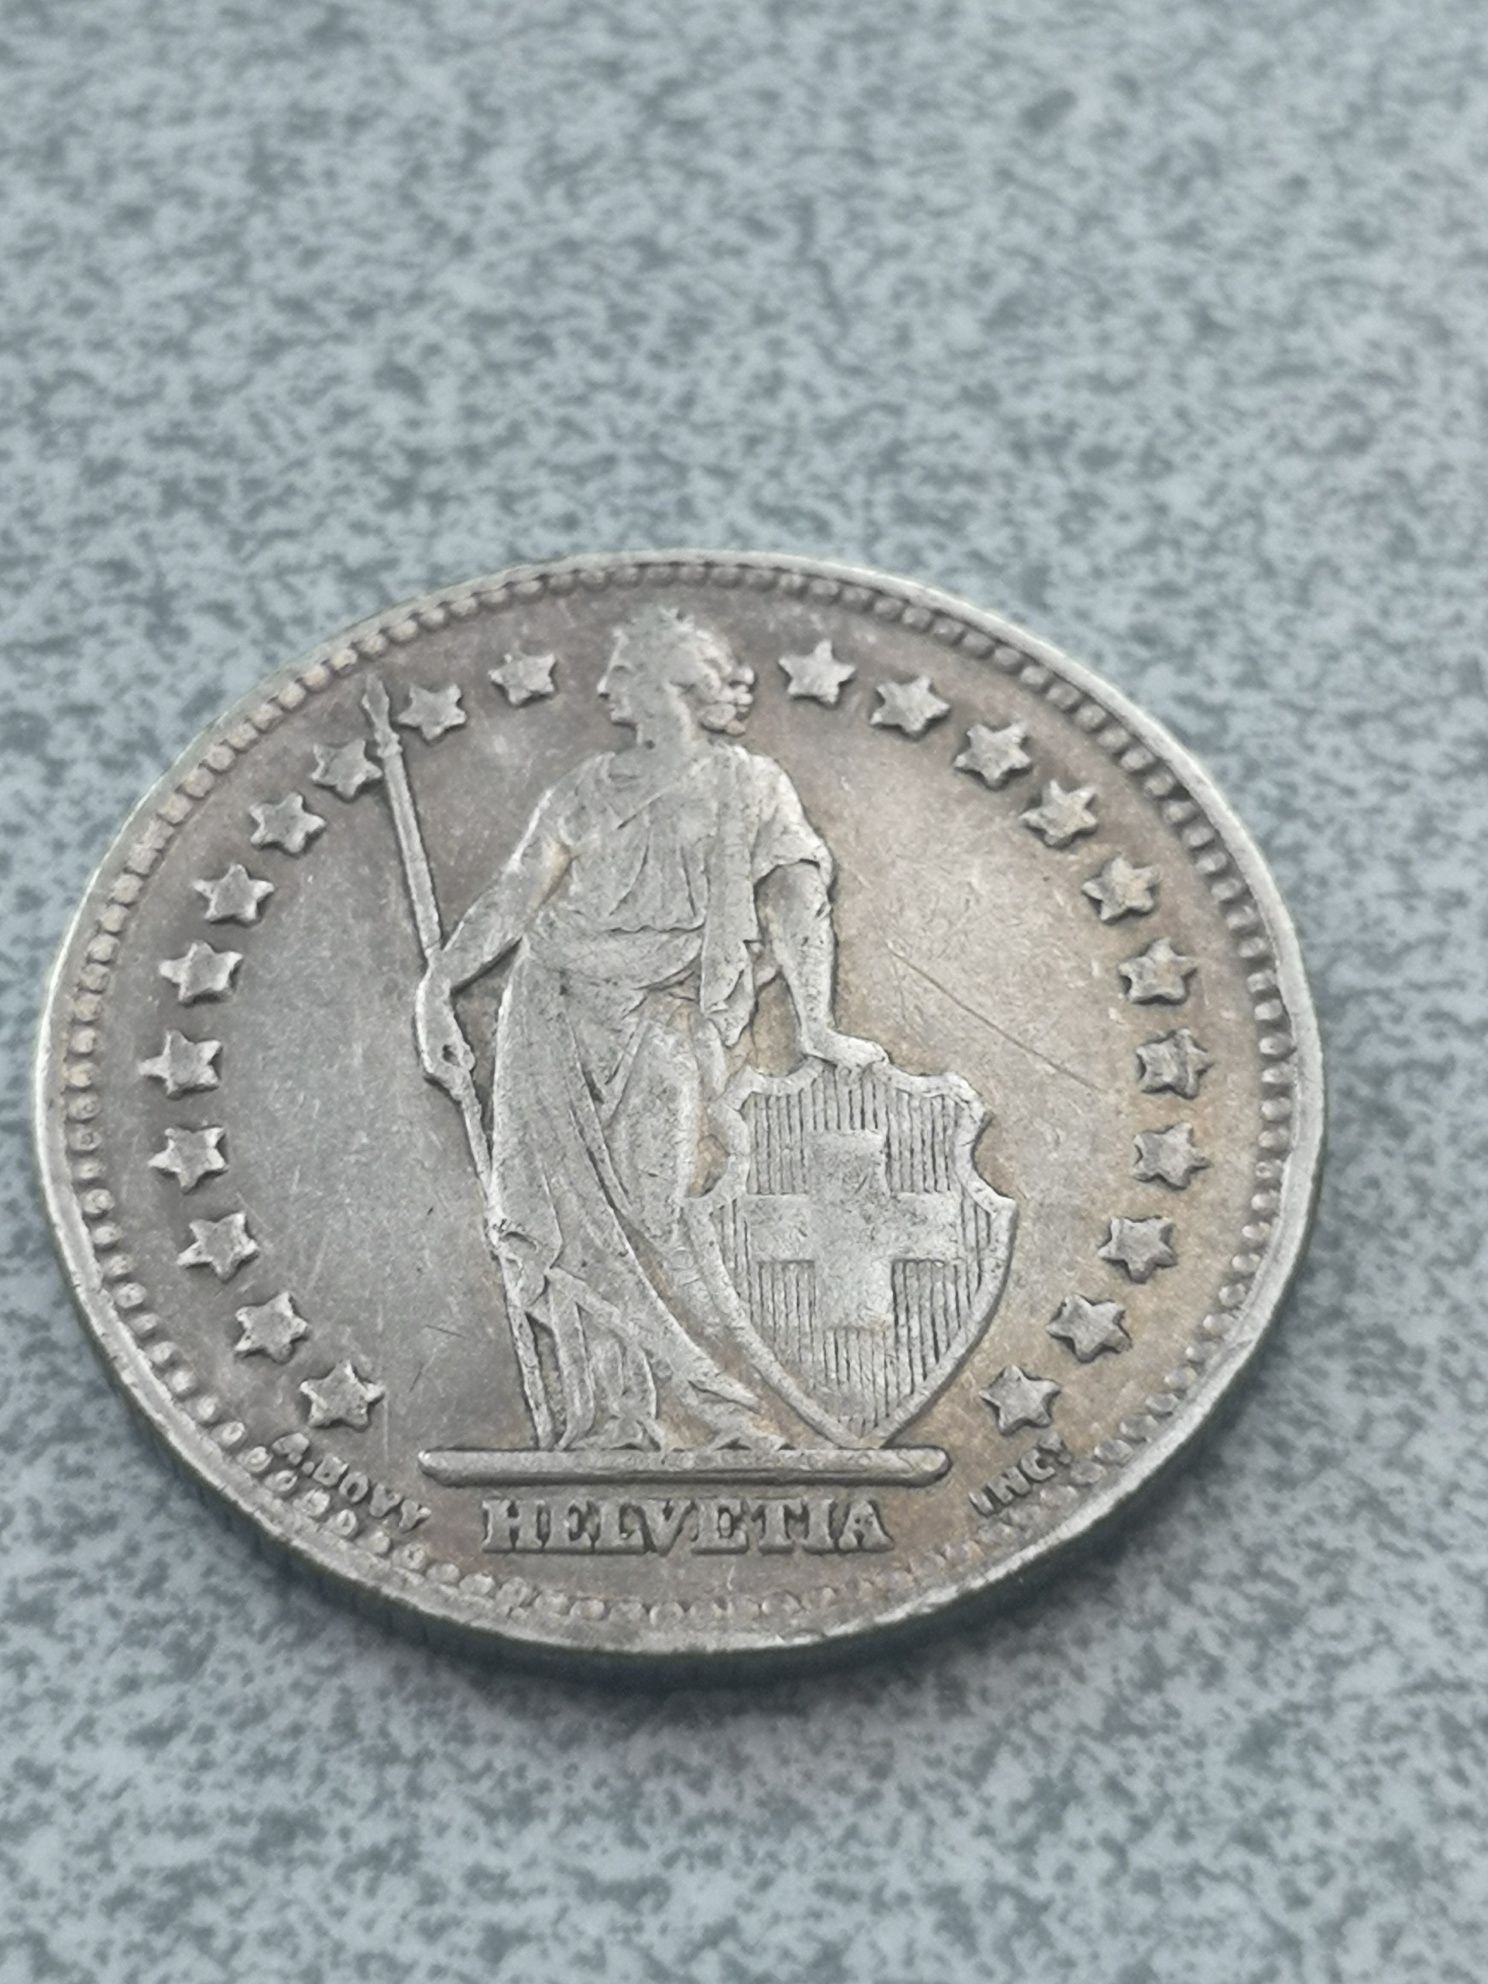 1 frank 1937r. Szwajcaria srebro Helvetia Ag